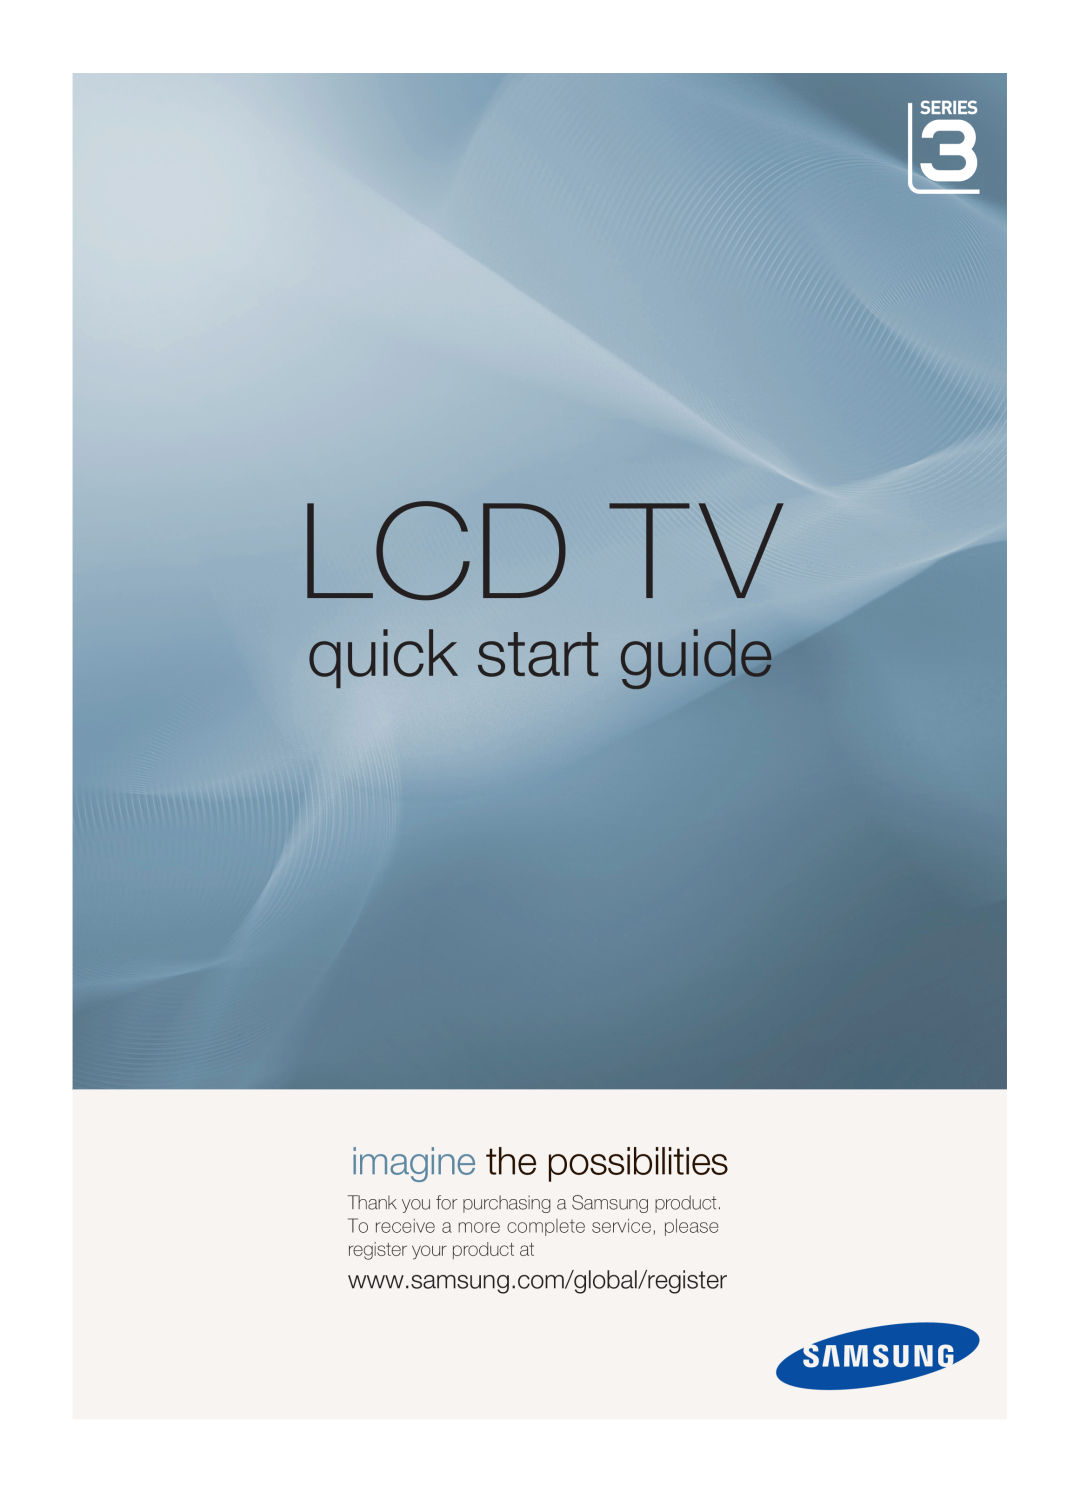 Samsung LA40A330J1 quick start Lcd Tv, quick start guide, imagine the possibilities 